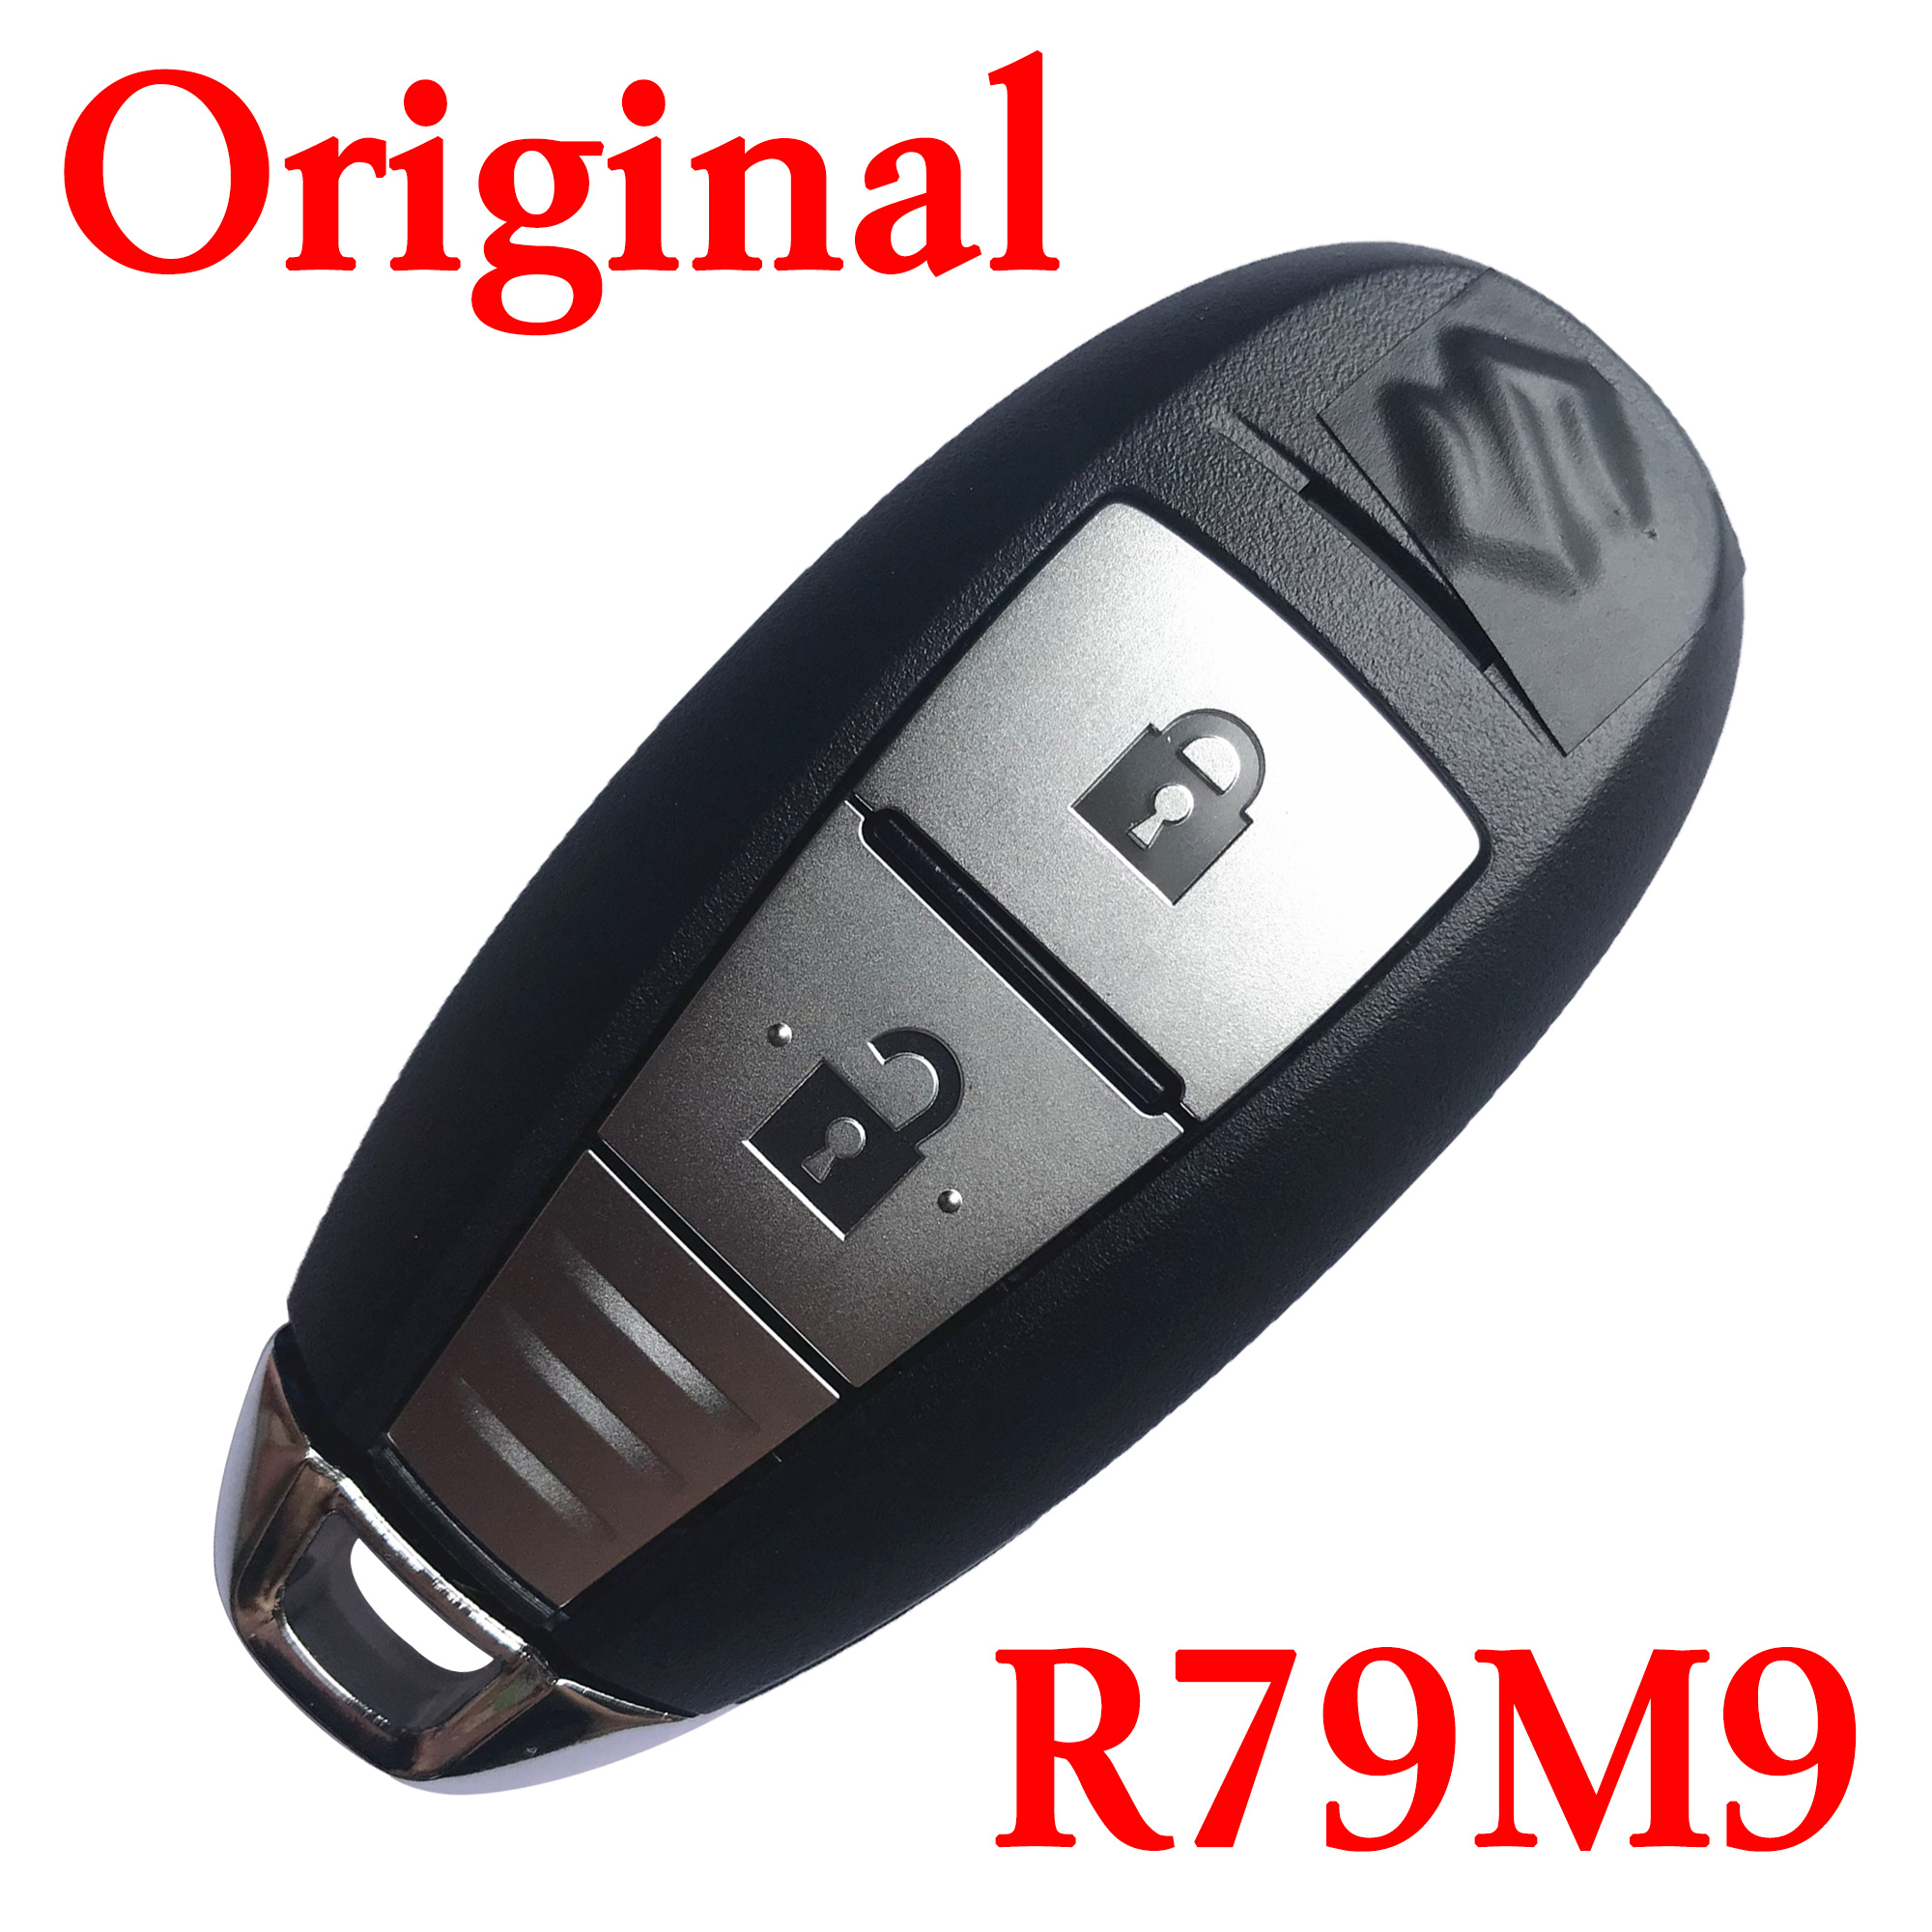 Original 2 Buttons 434 MHz Smart Proximity Key for Suzuki Kizashi - CMIIT ID: 2013DJ1474 R79M0